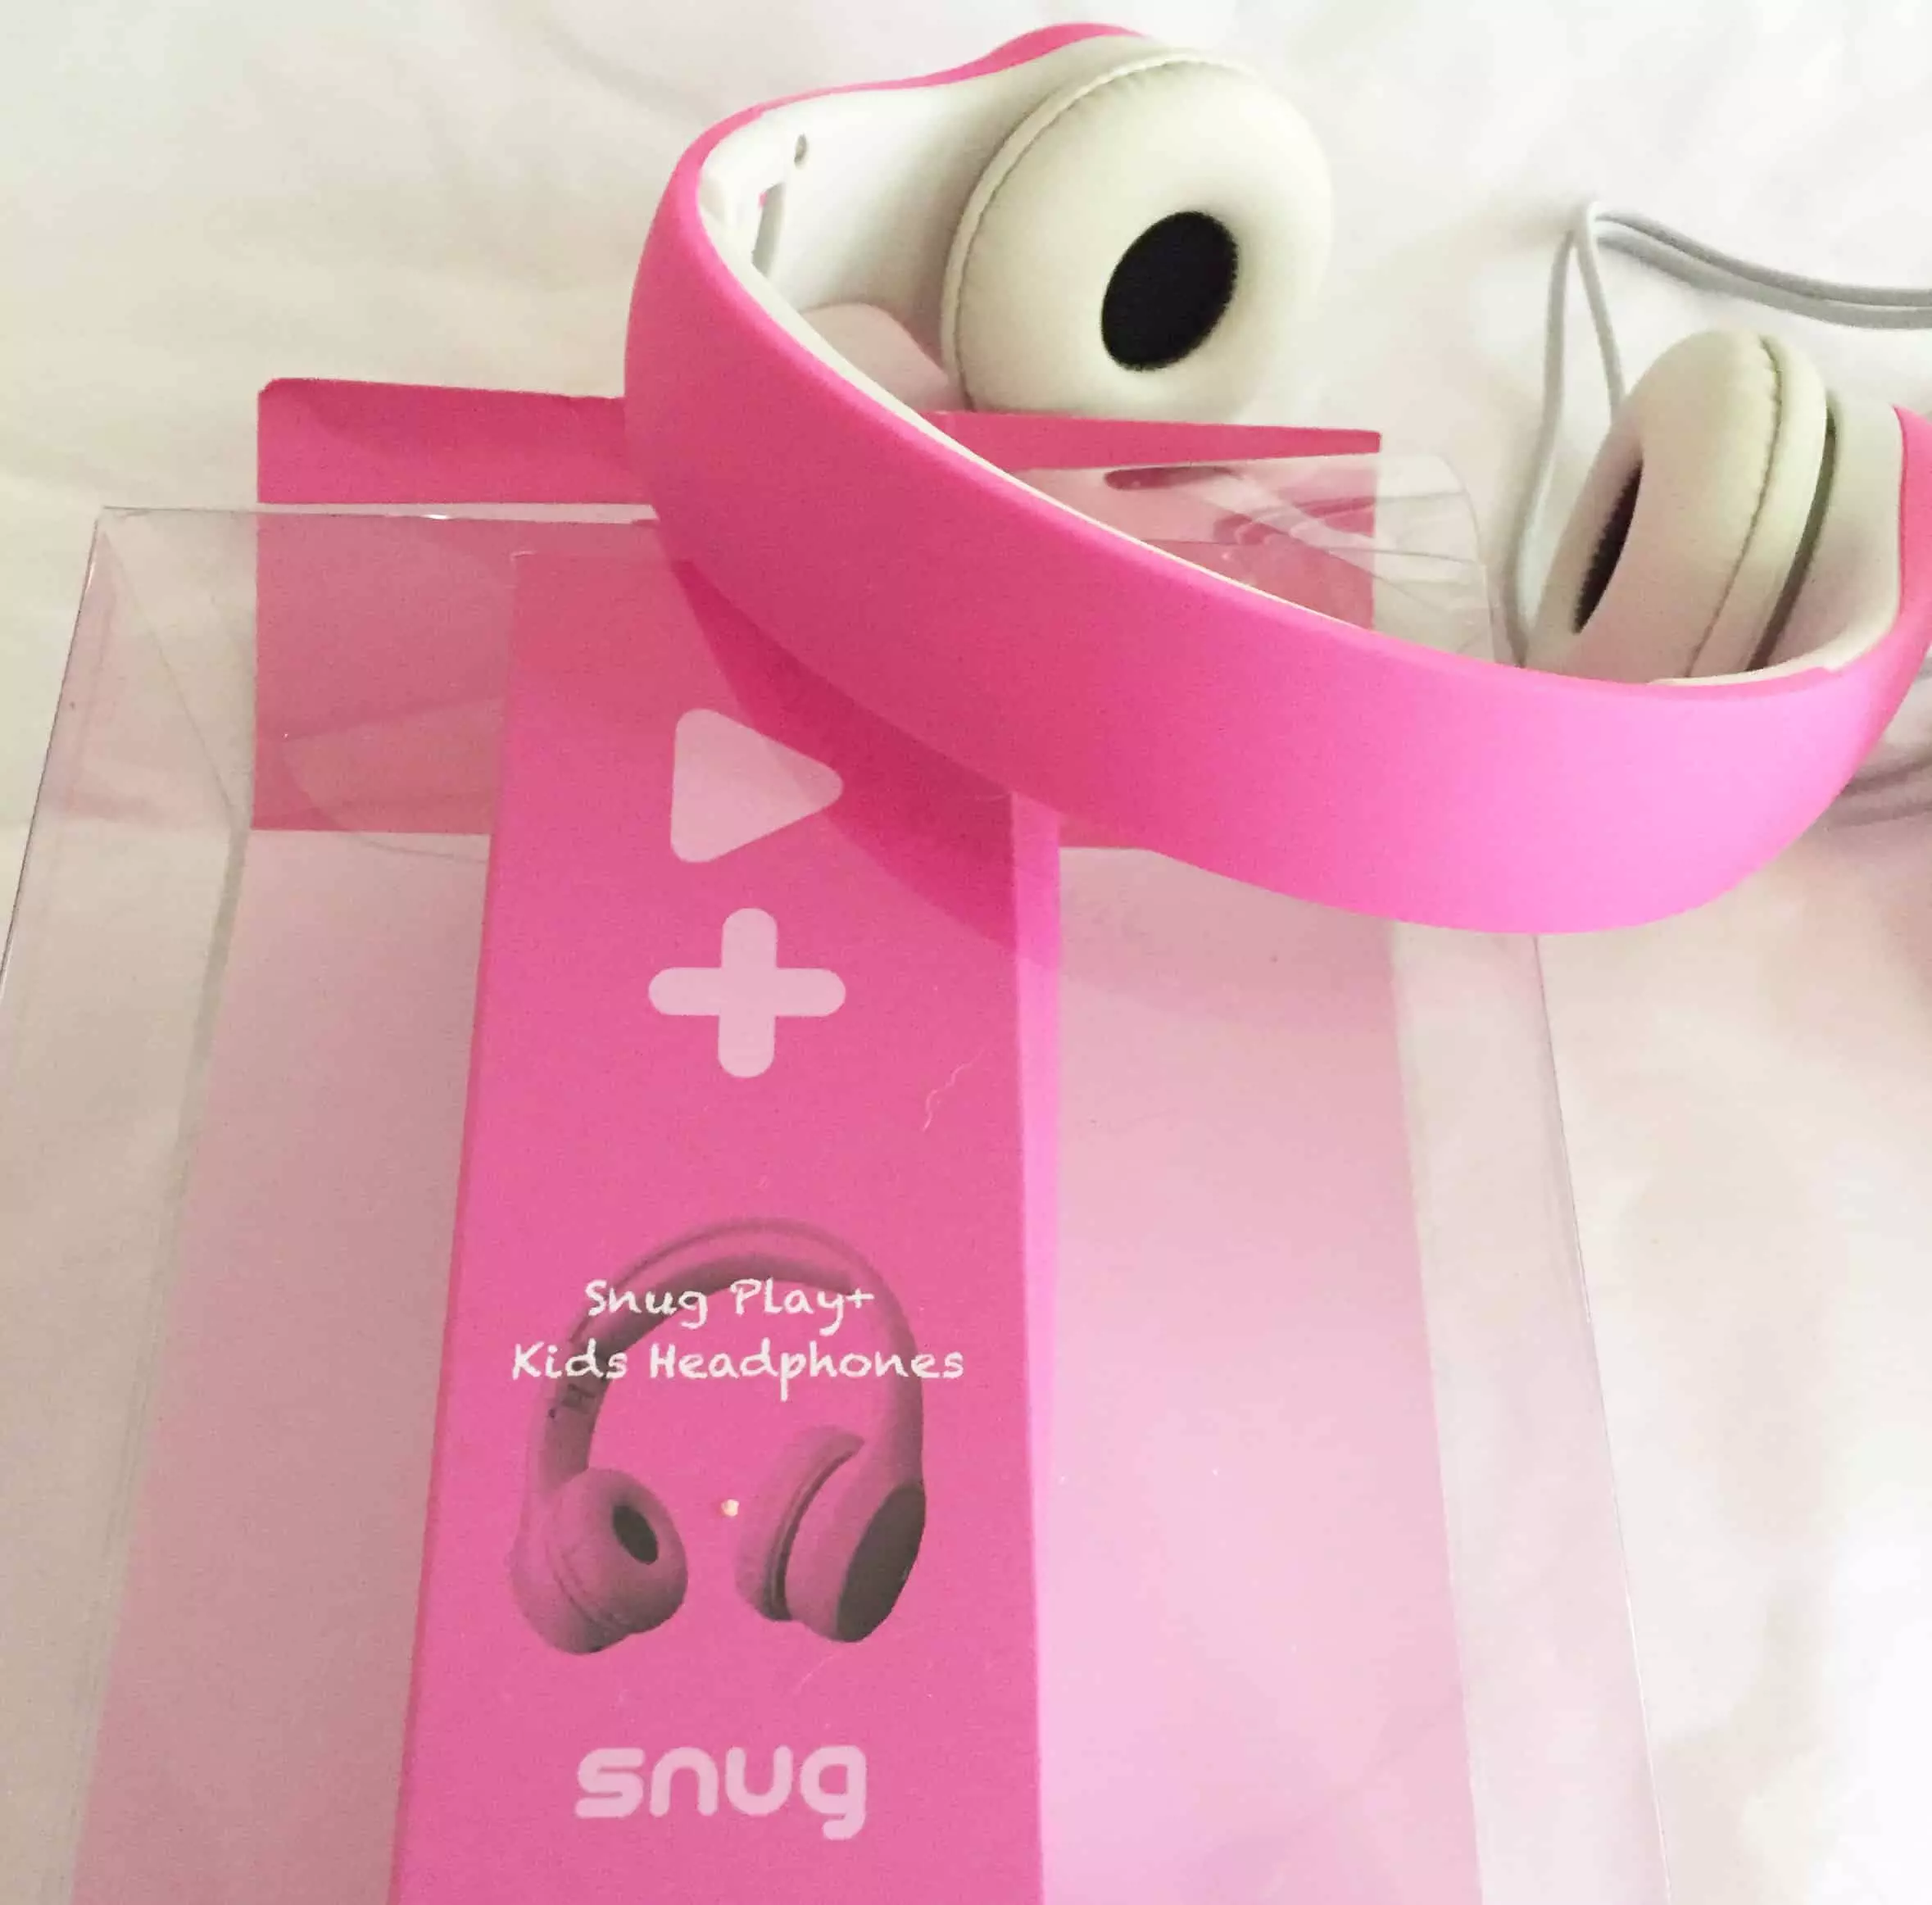 Kids Headphones: Snug Play+ Kids Volume Limiting Headphones